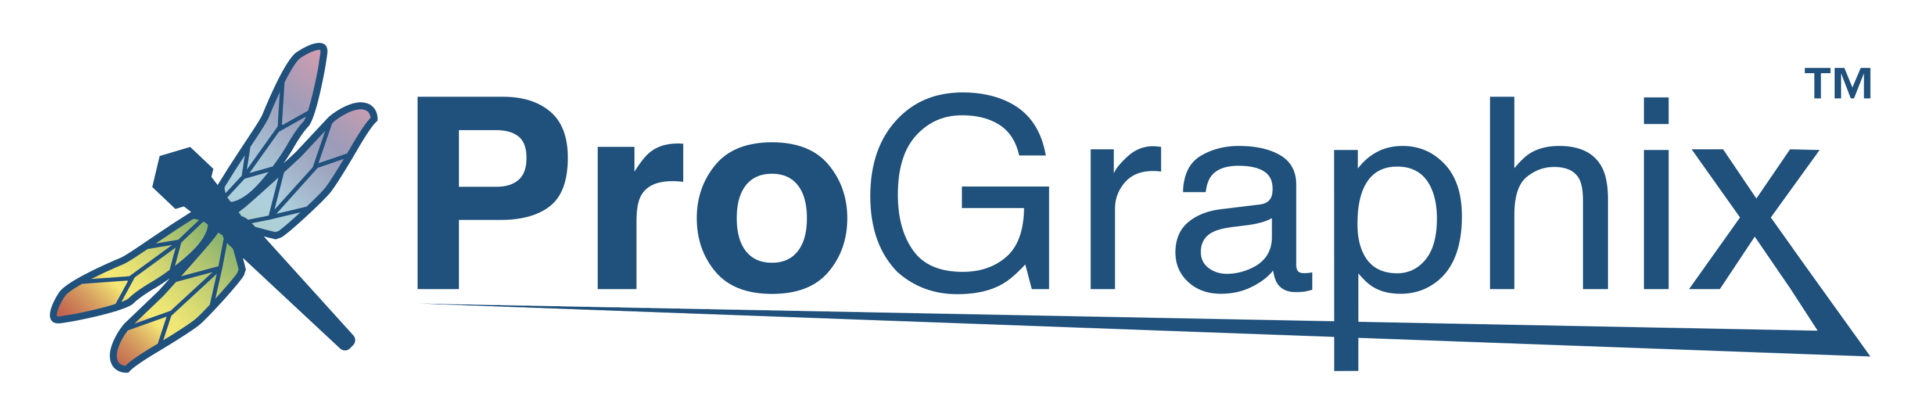 ProGraphix logo